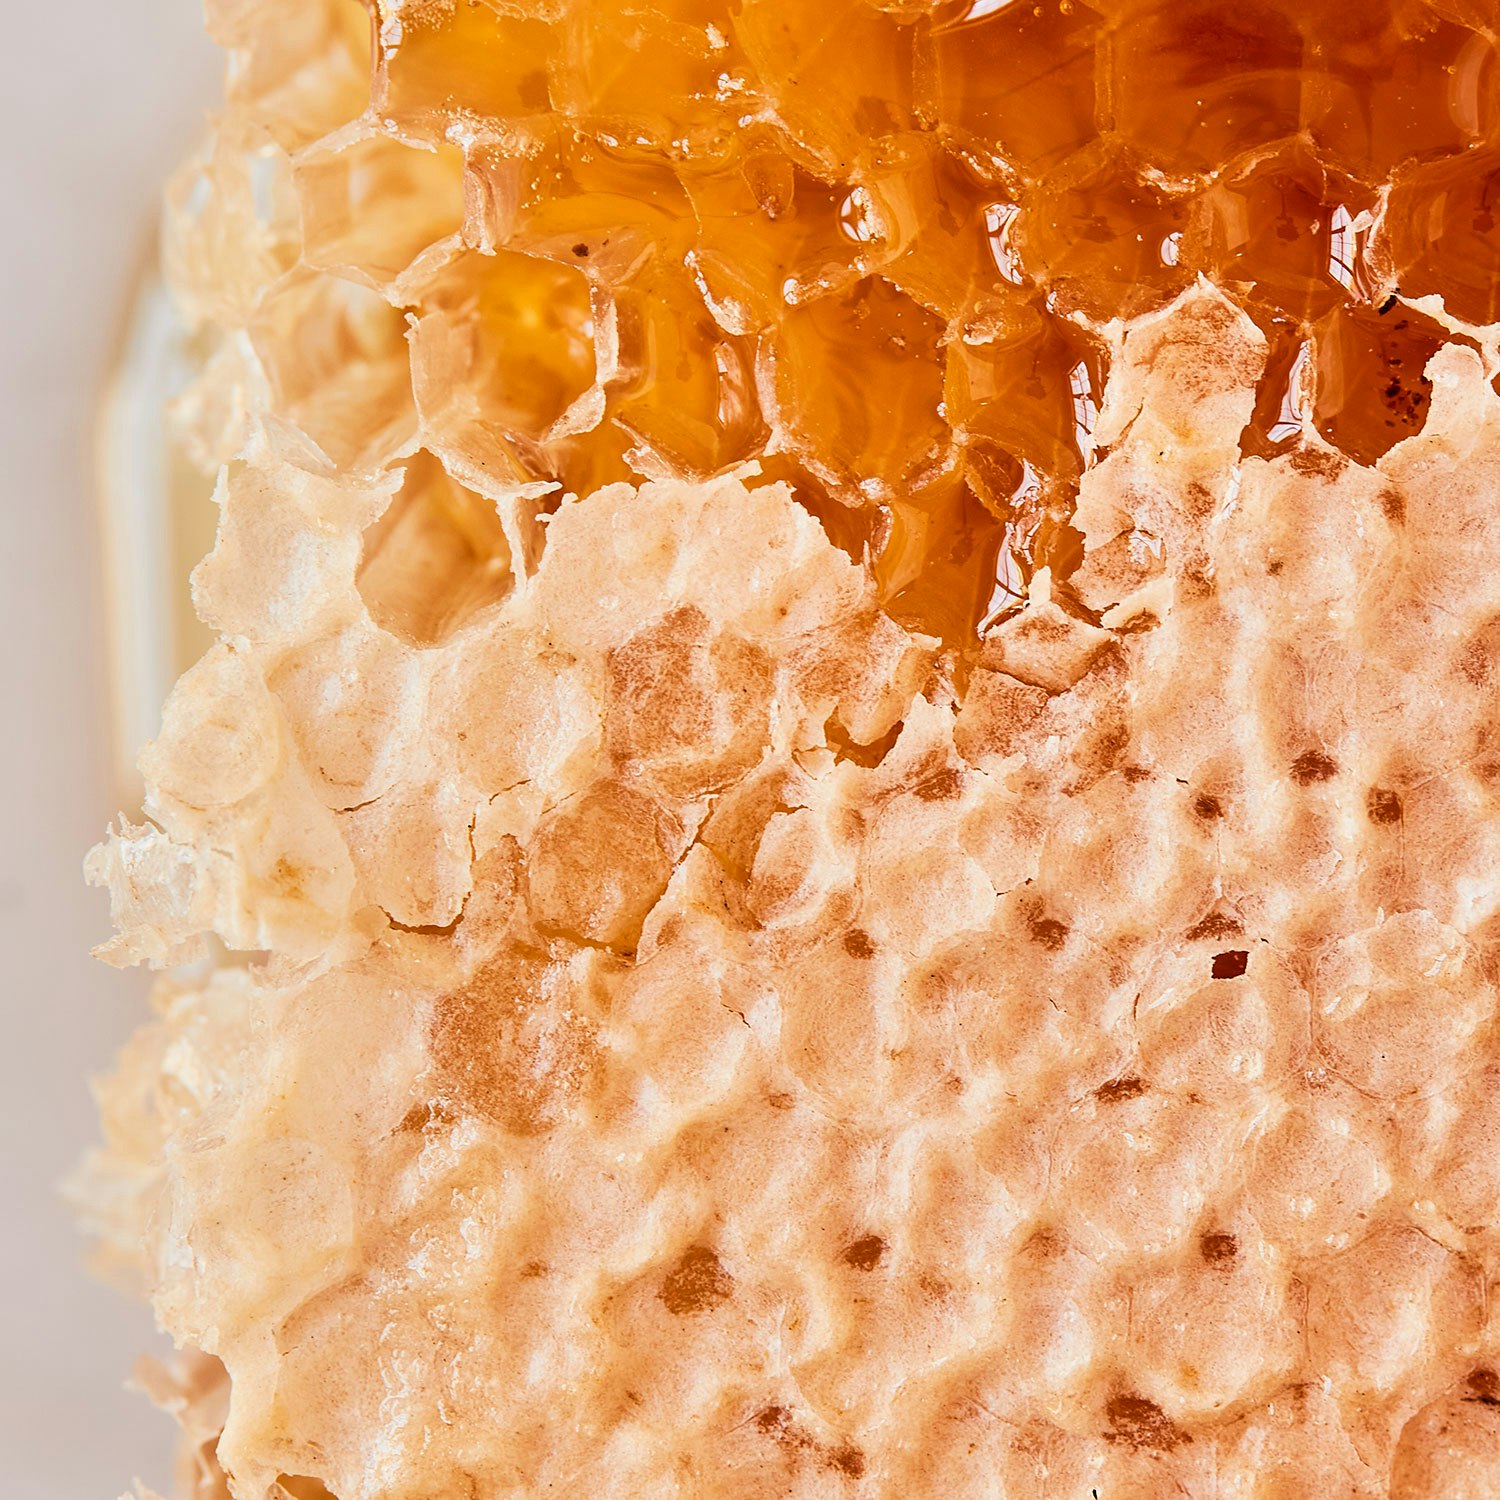 Red-Bee-Honey-Comb-Box-specialty-foods-1500-02